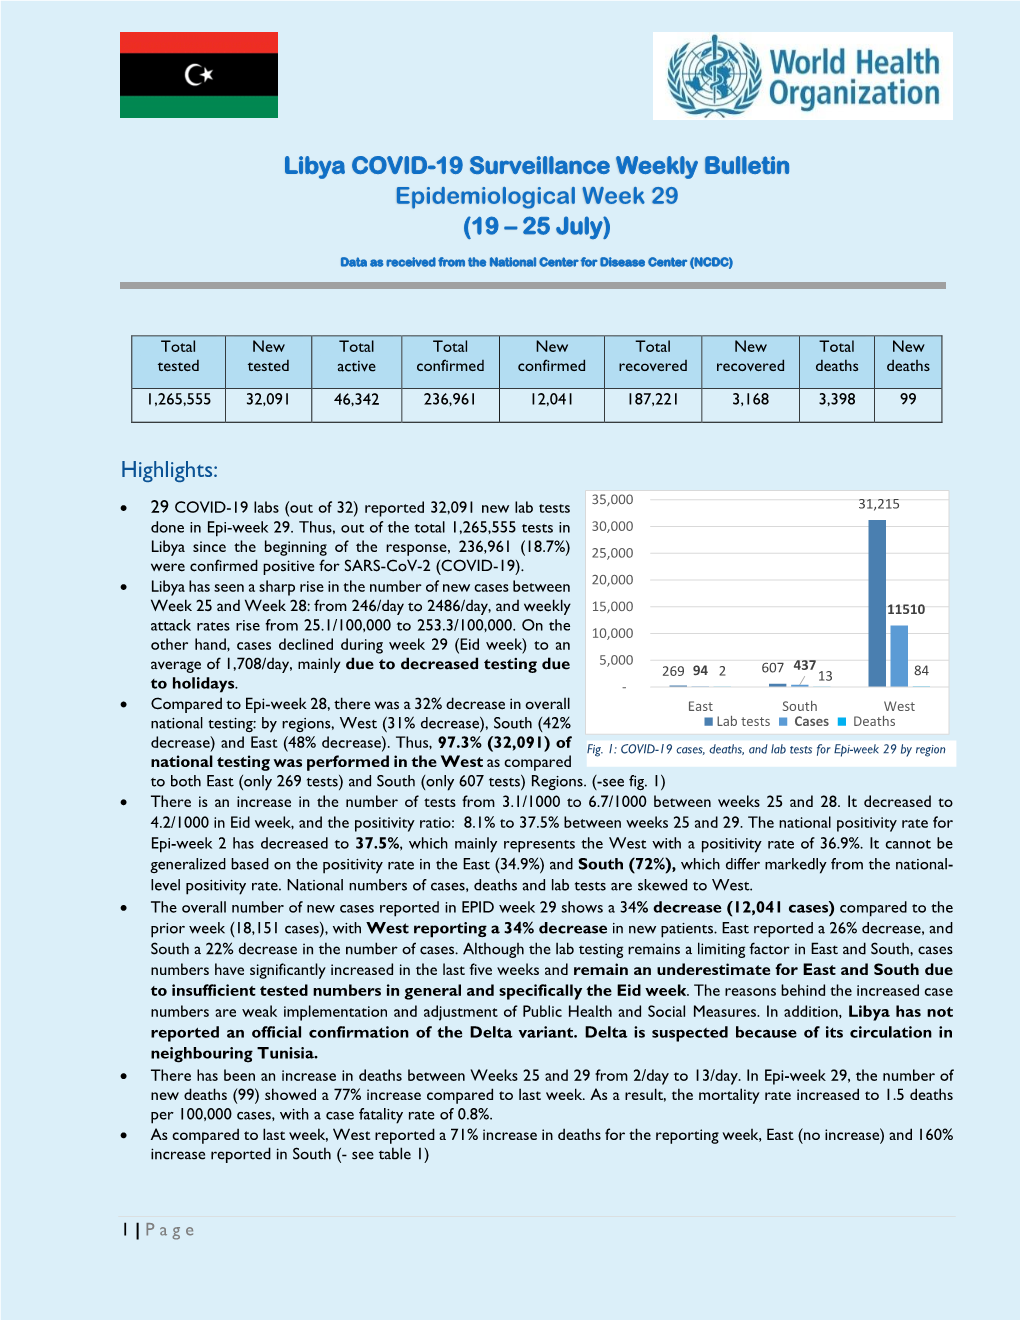 Libya COVID-19 Surveillance Weekly Bulletin Epidemiological Week 29 (19 – 25 July)